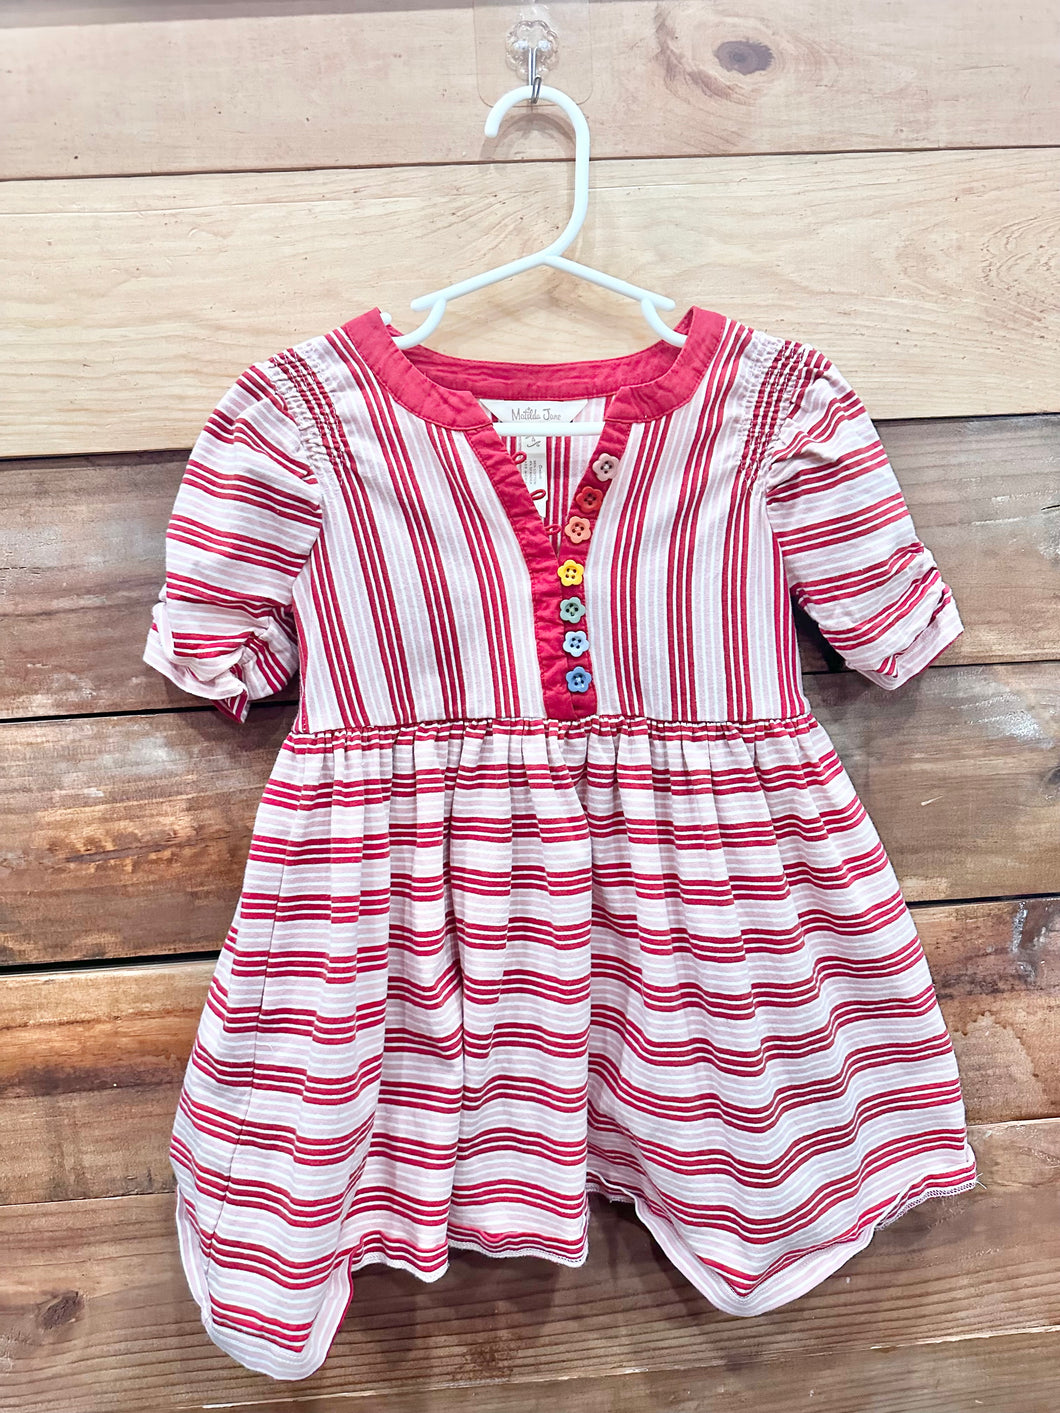 Matilda Jane Red Striped Dress Size 4